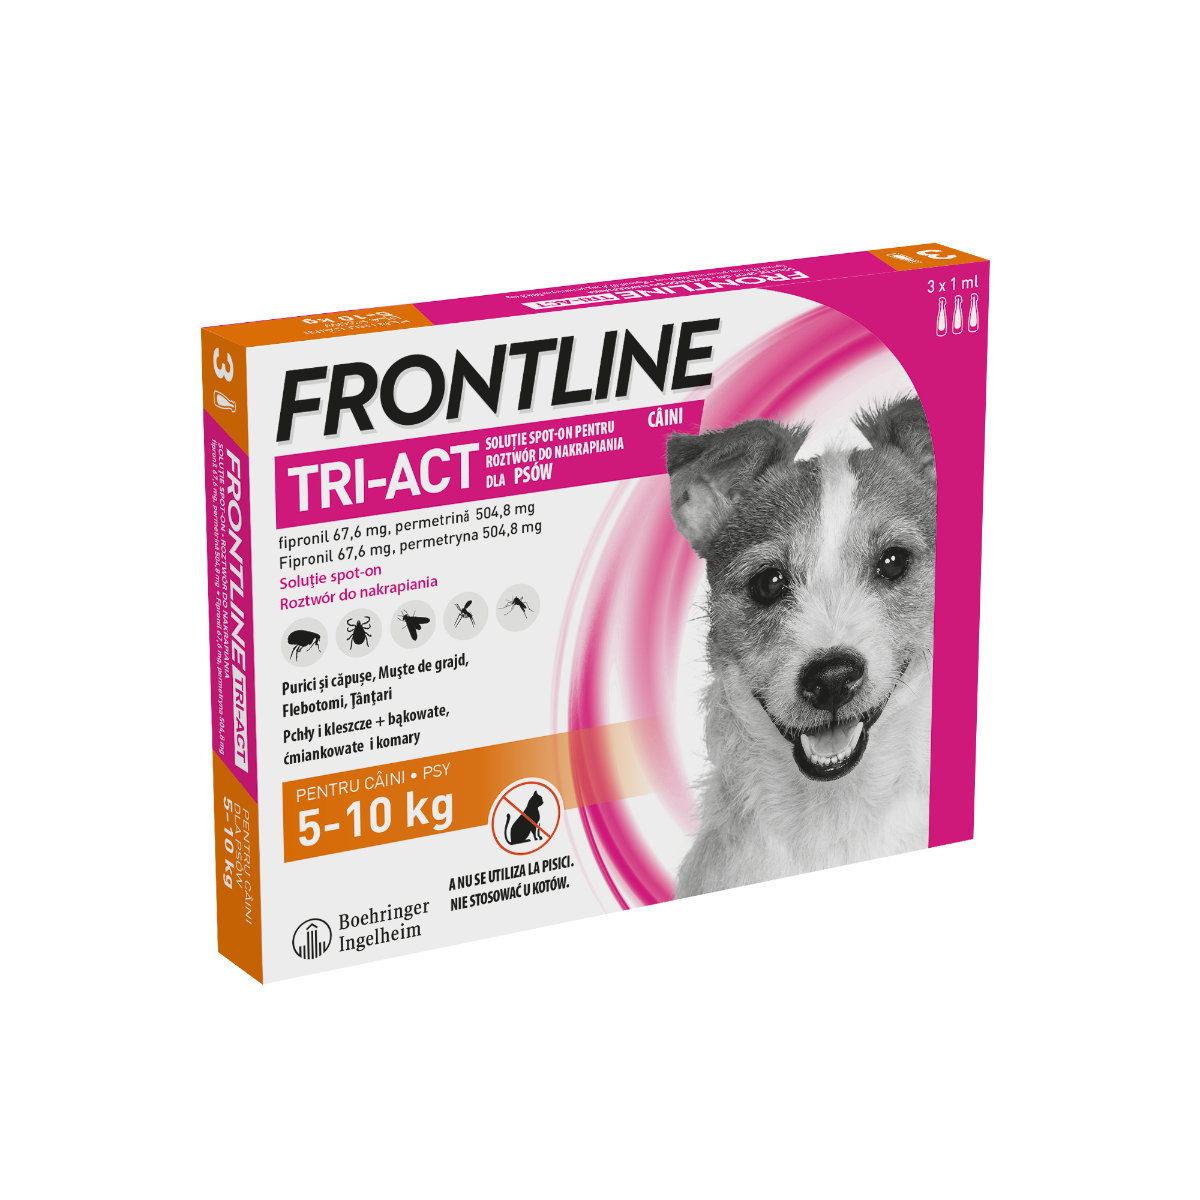 Frontline Tri-Act solutie spot-on pentru câini de 5-10 kg, 3 pipete x 1 ml, Frontline